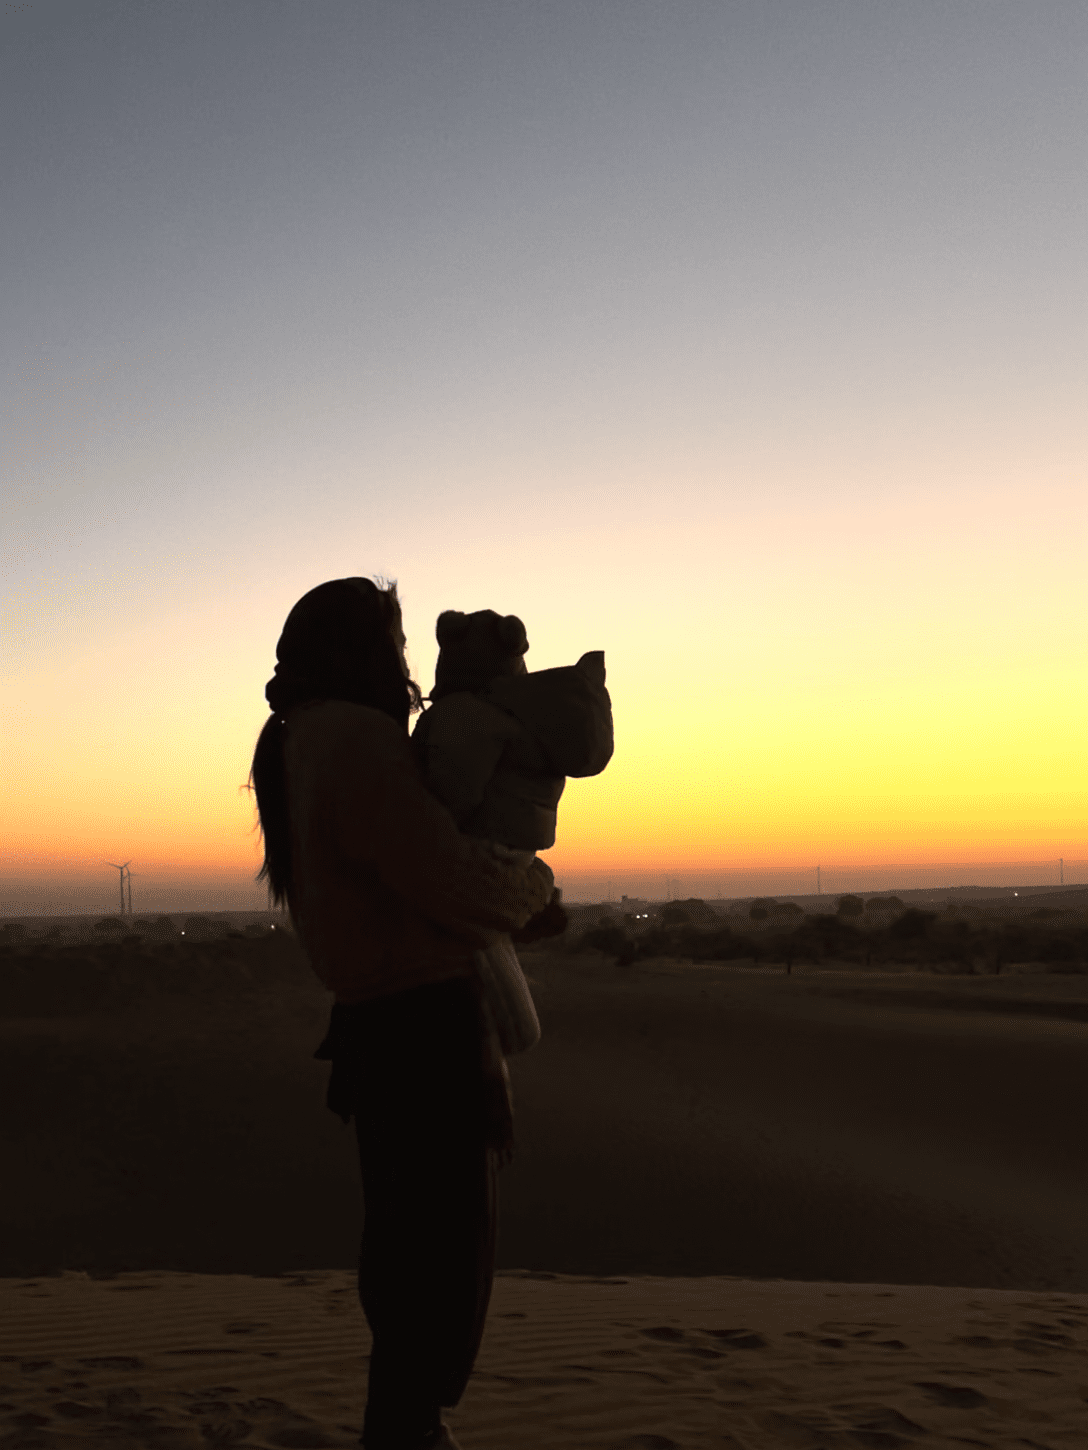 silhouette of woman holding baby overlooking desert sunrise